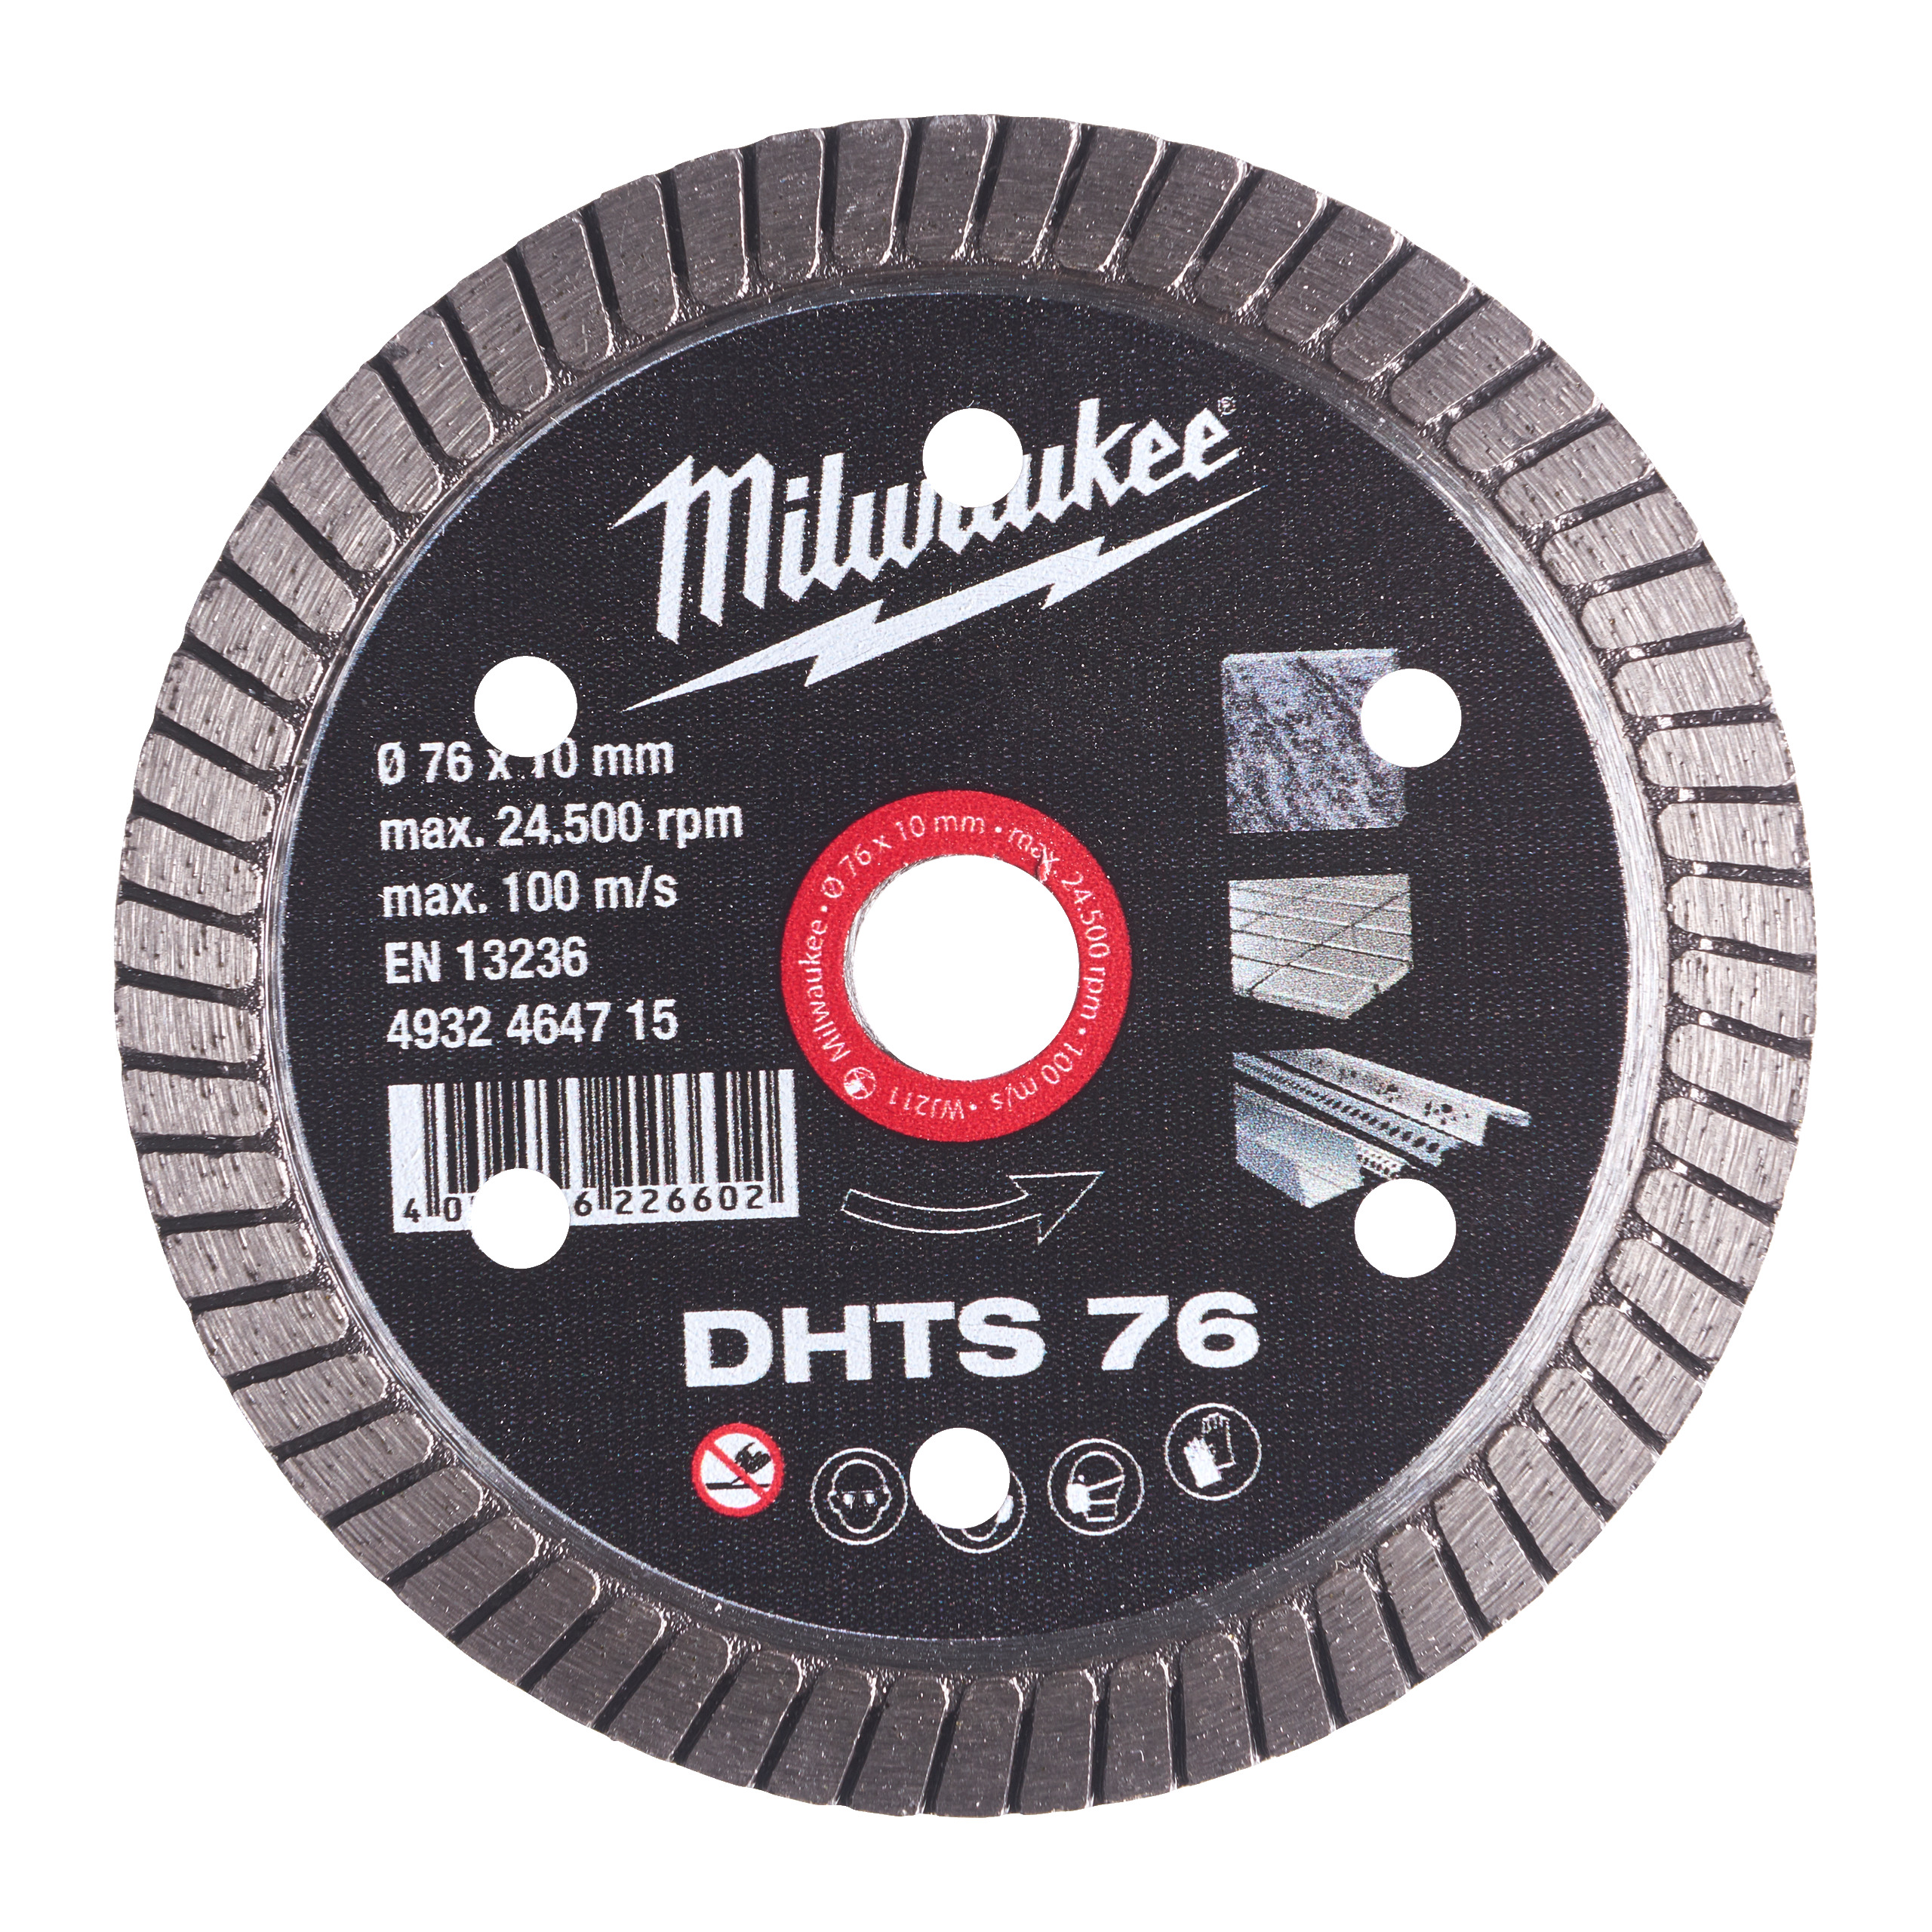 Tarcza diamentowa DHTi 76 mm  1